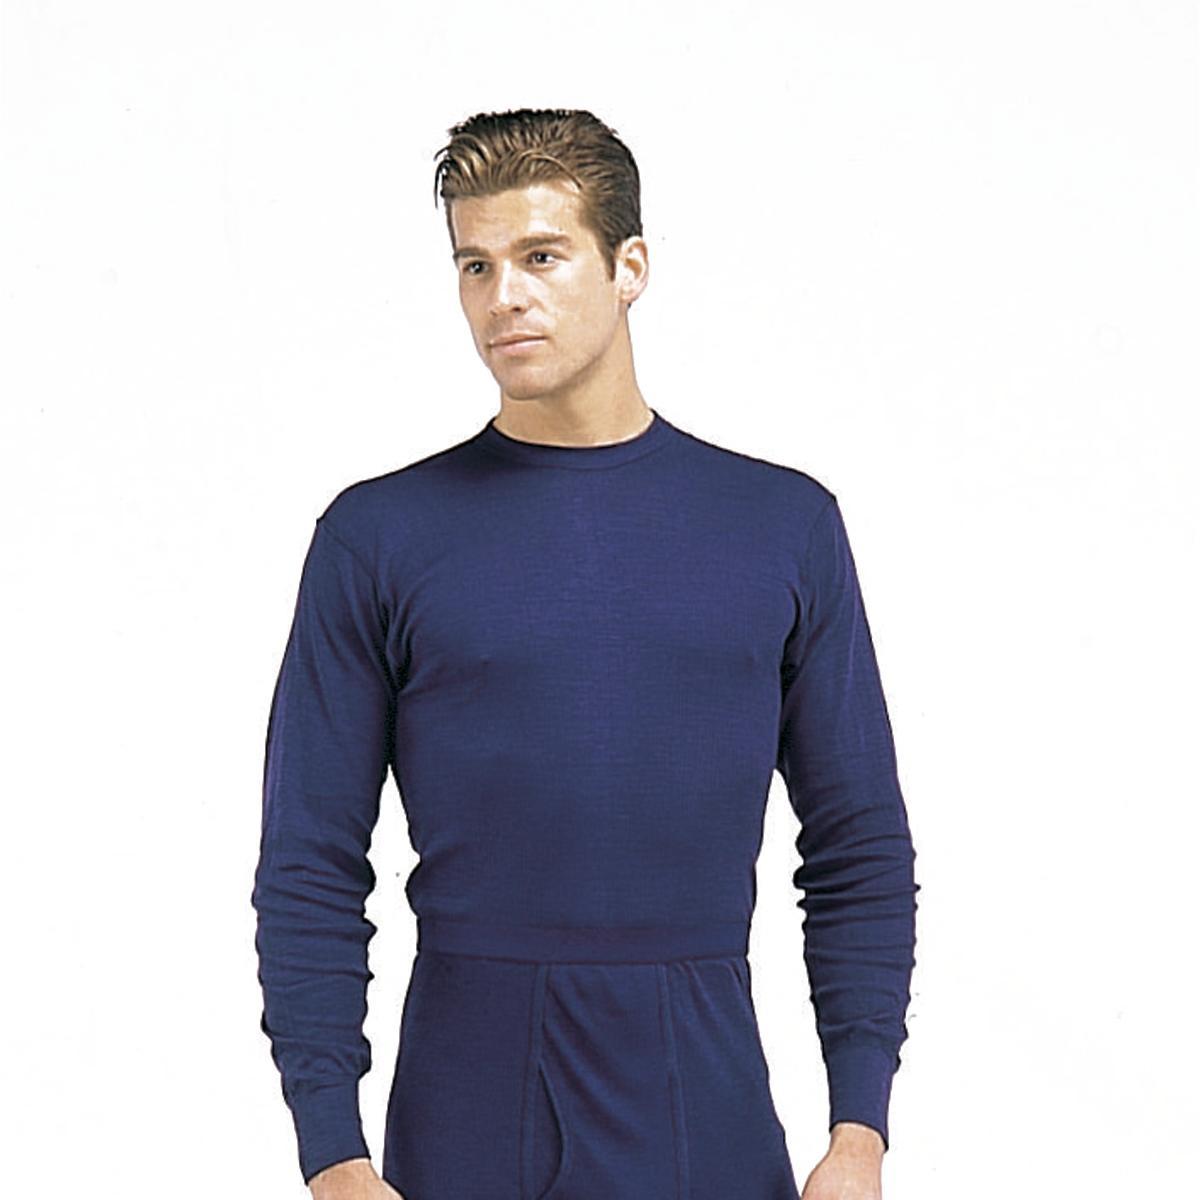 Blue Polypropylene Thermal Long Underwear Tops, Shirts - image 1 of 1